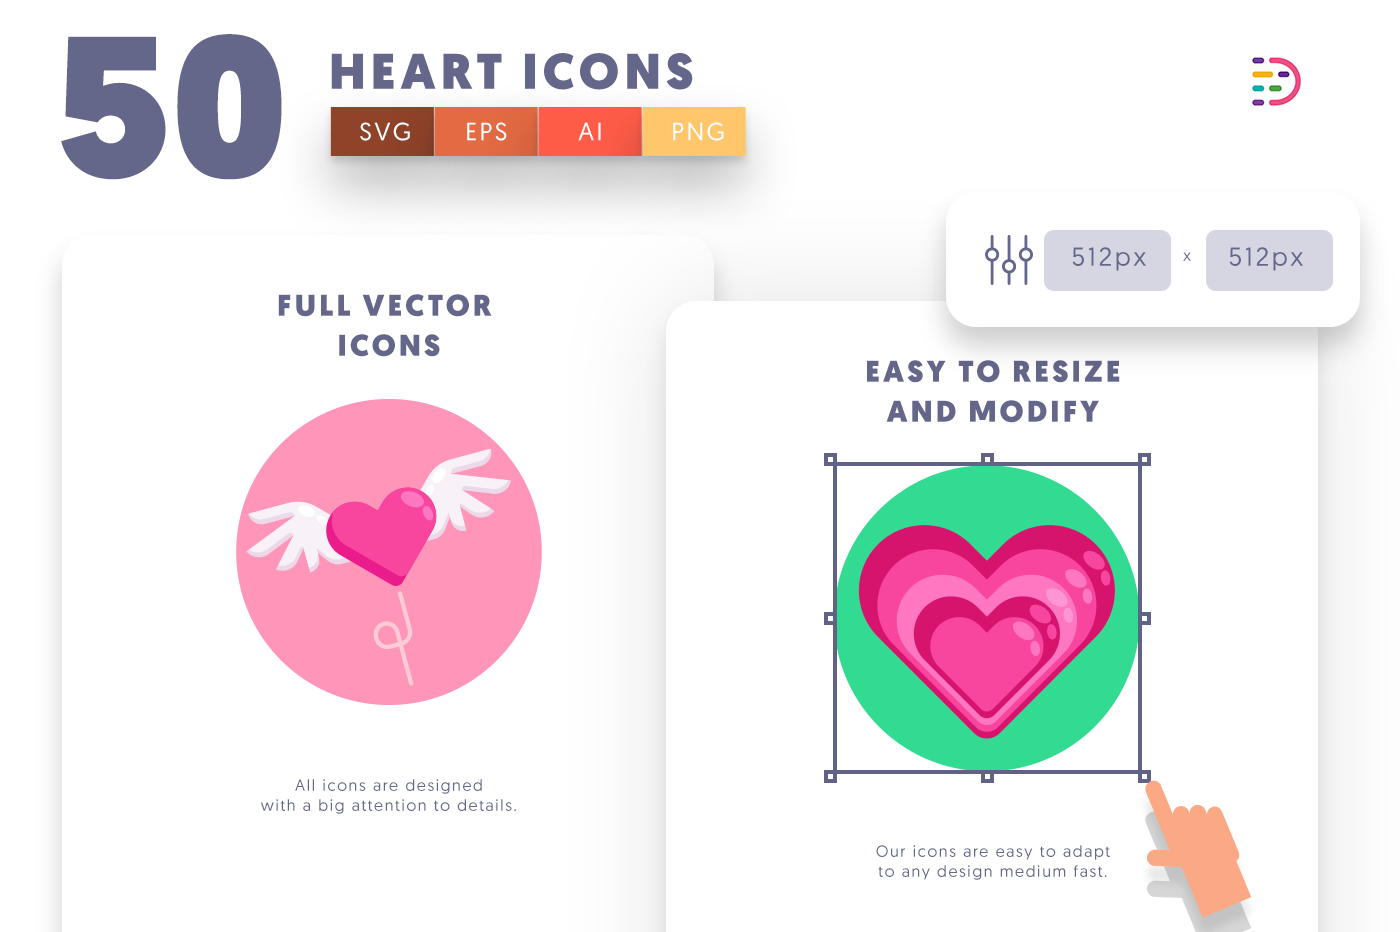 Full vector Heart Icons